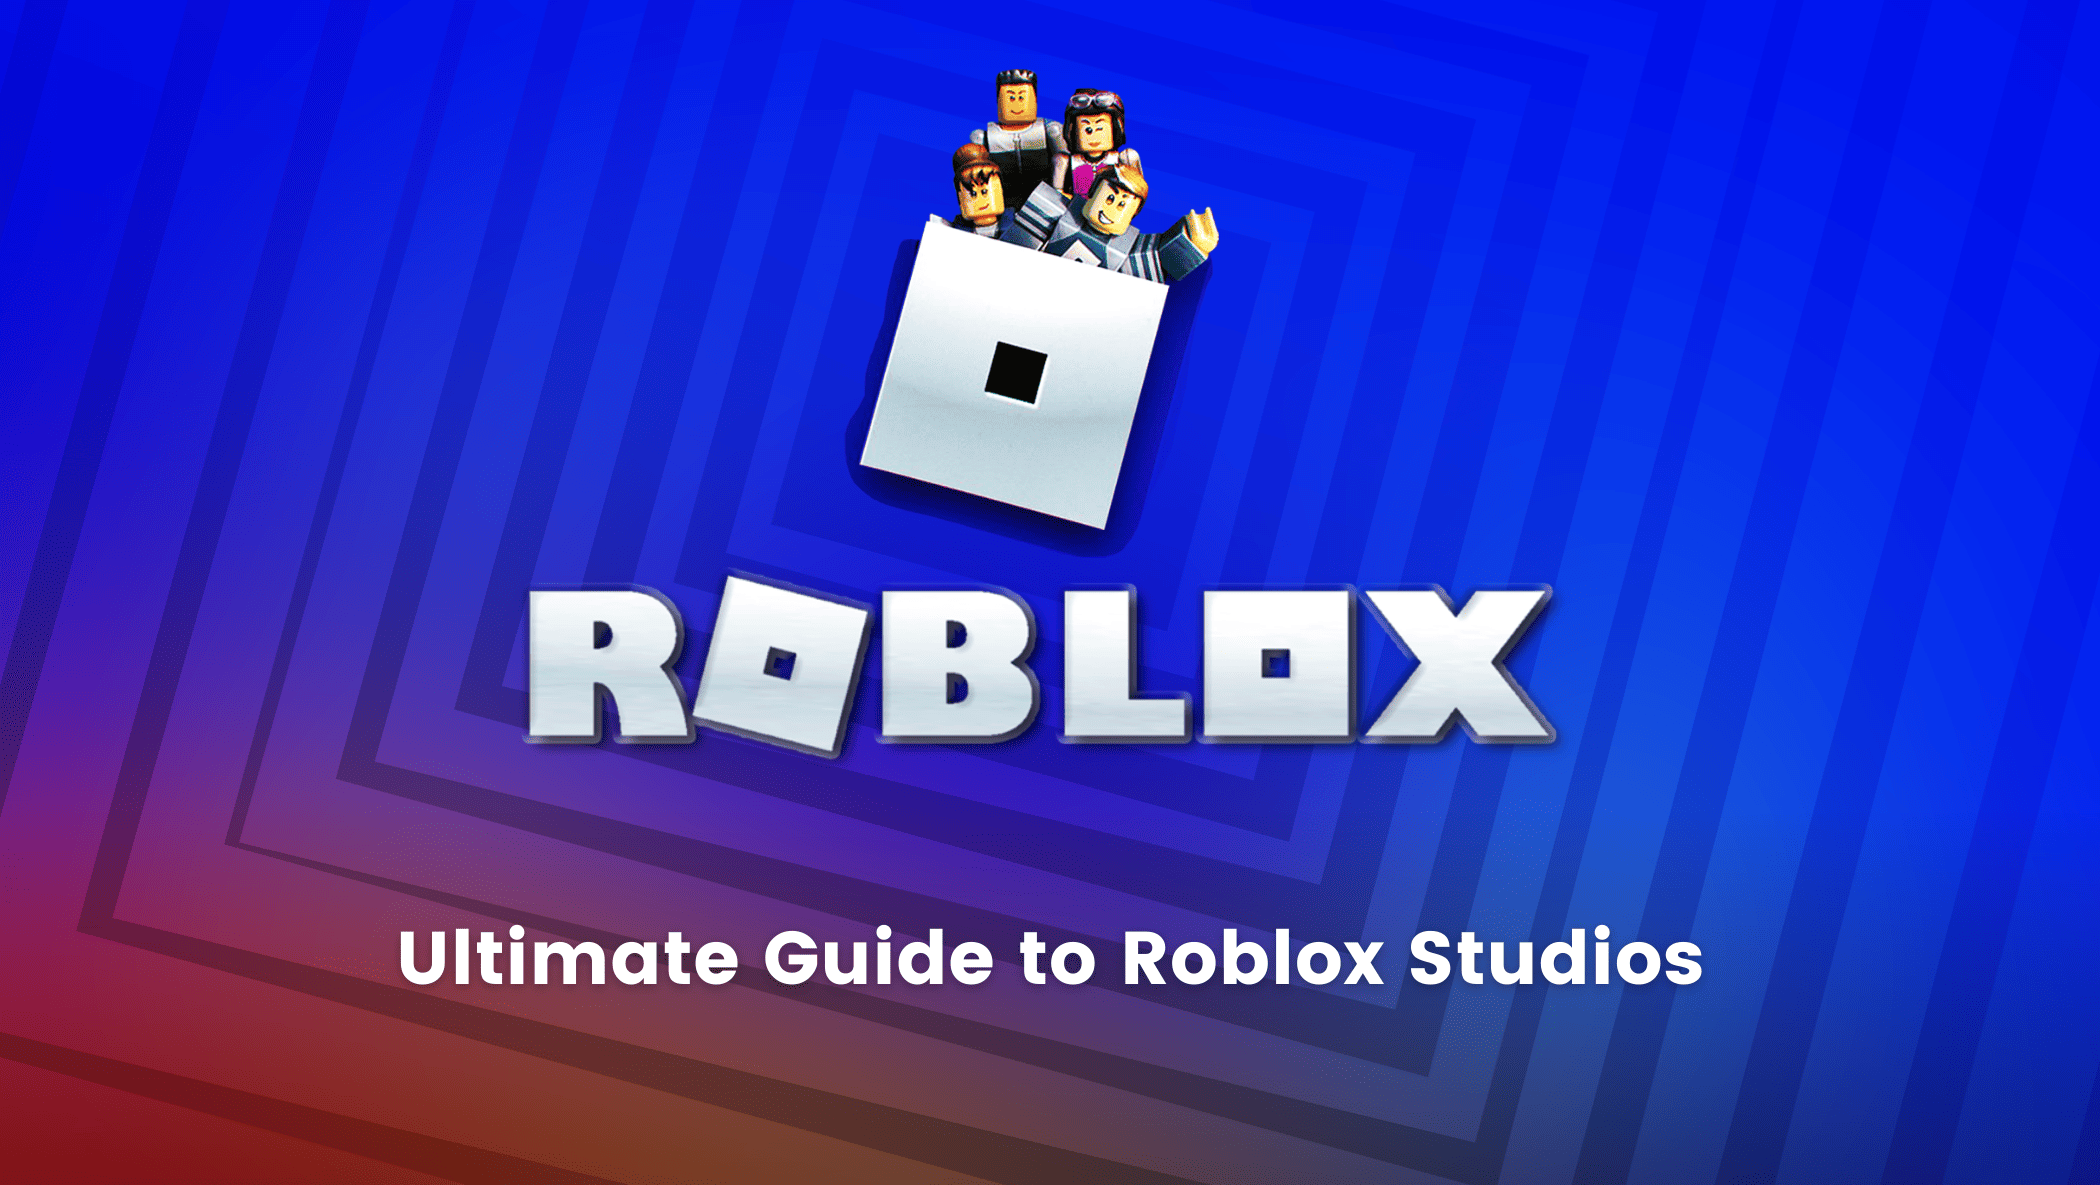 Basic ROBLOX Lua programming - Reading Public Library